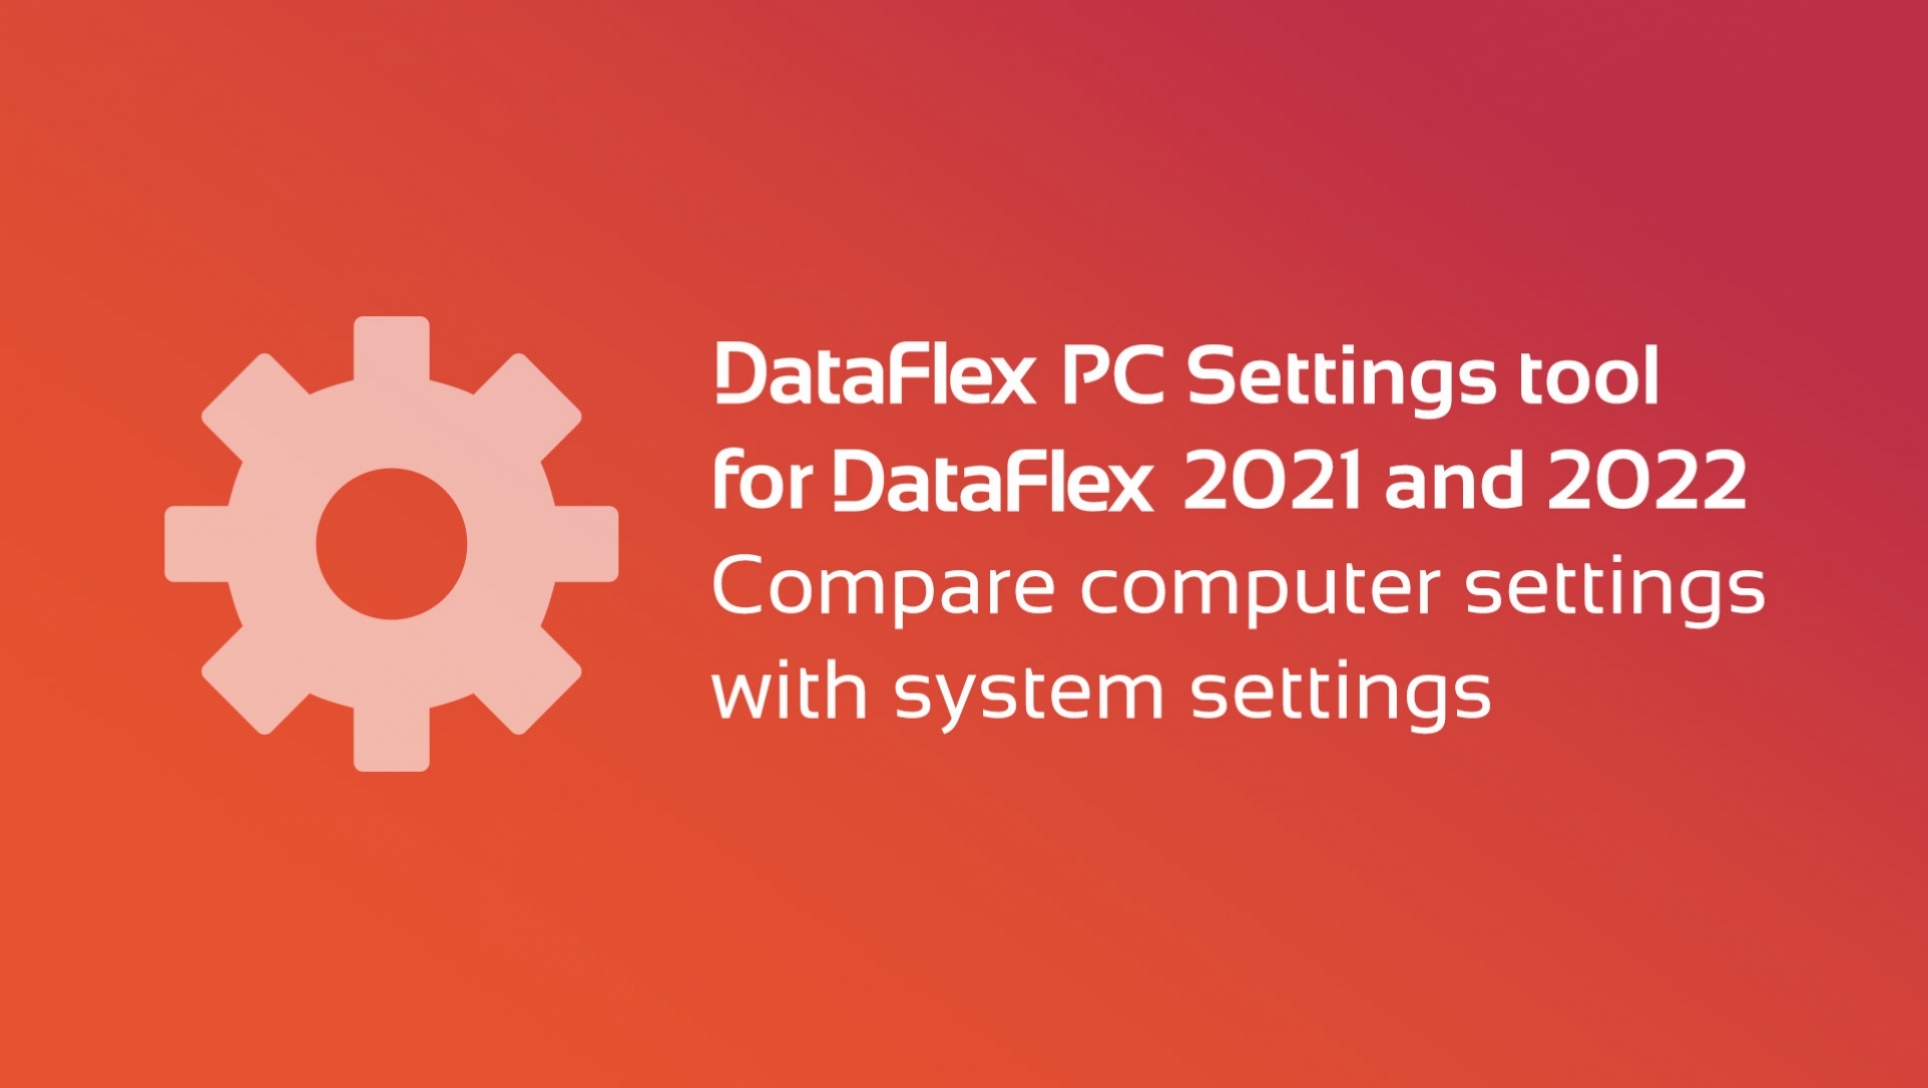 Free PC Settings tool for DataFlex